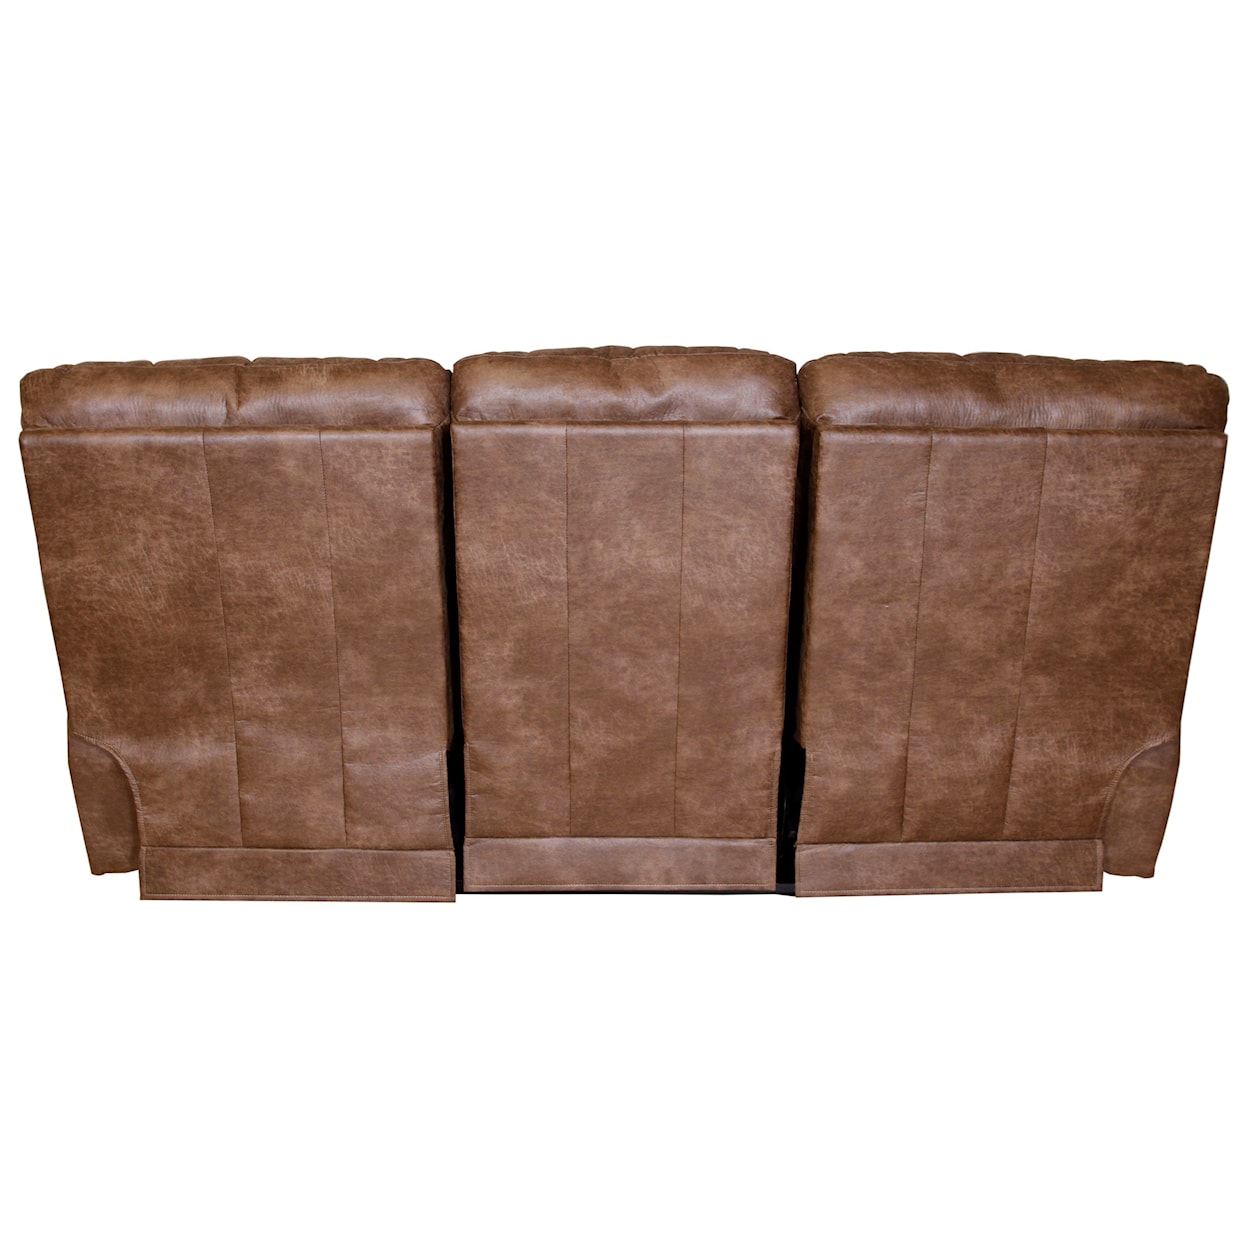 La-Z-Boy James Power La-Z-Time® Full Reclining Sofa